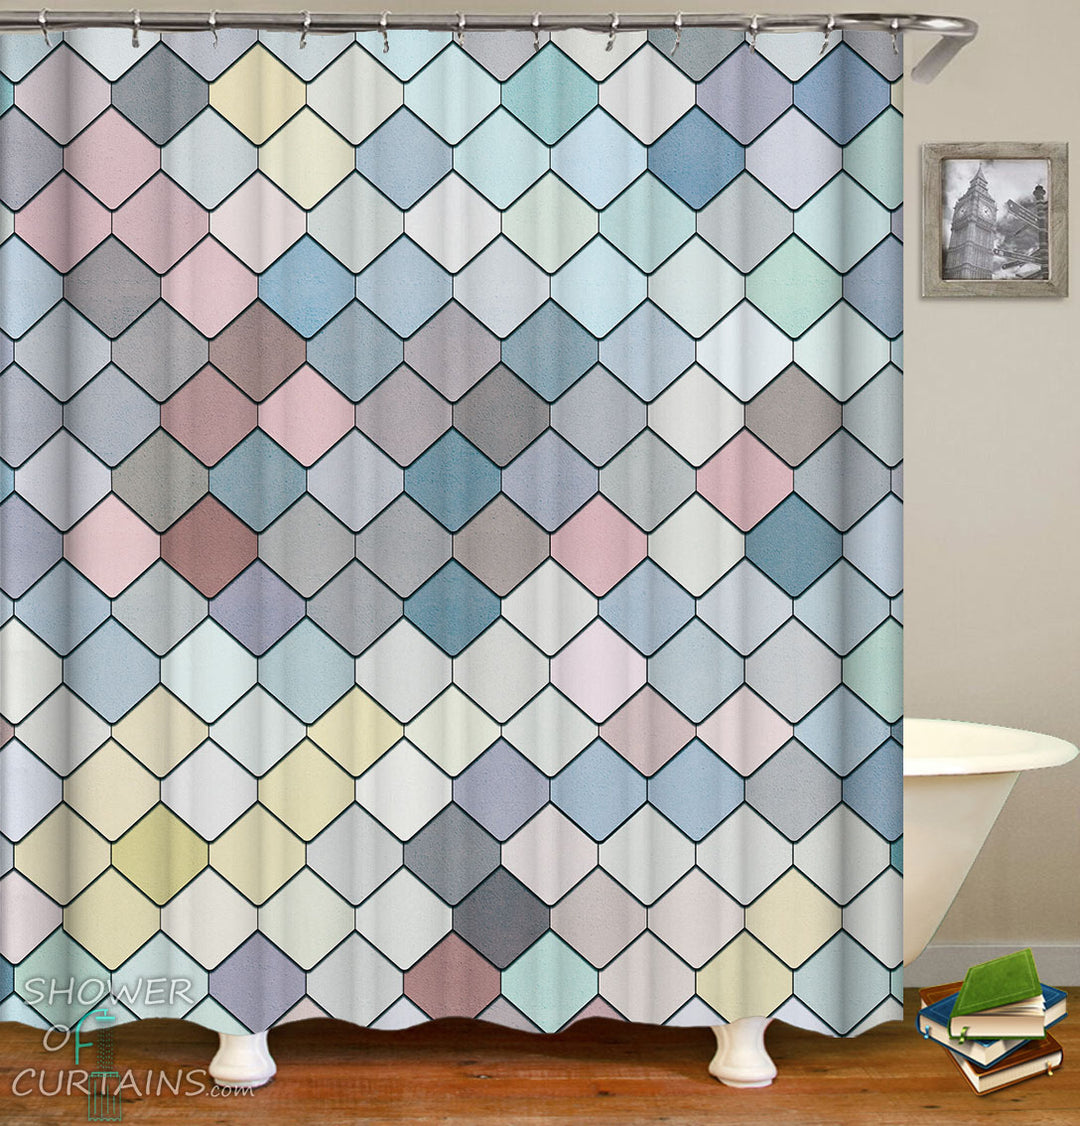 Colorful Tiles Shower Curtain - Elegnat Bathroom Decor Design